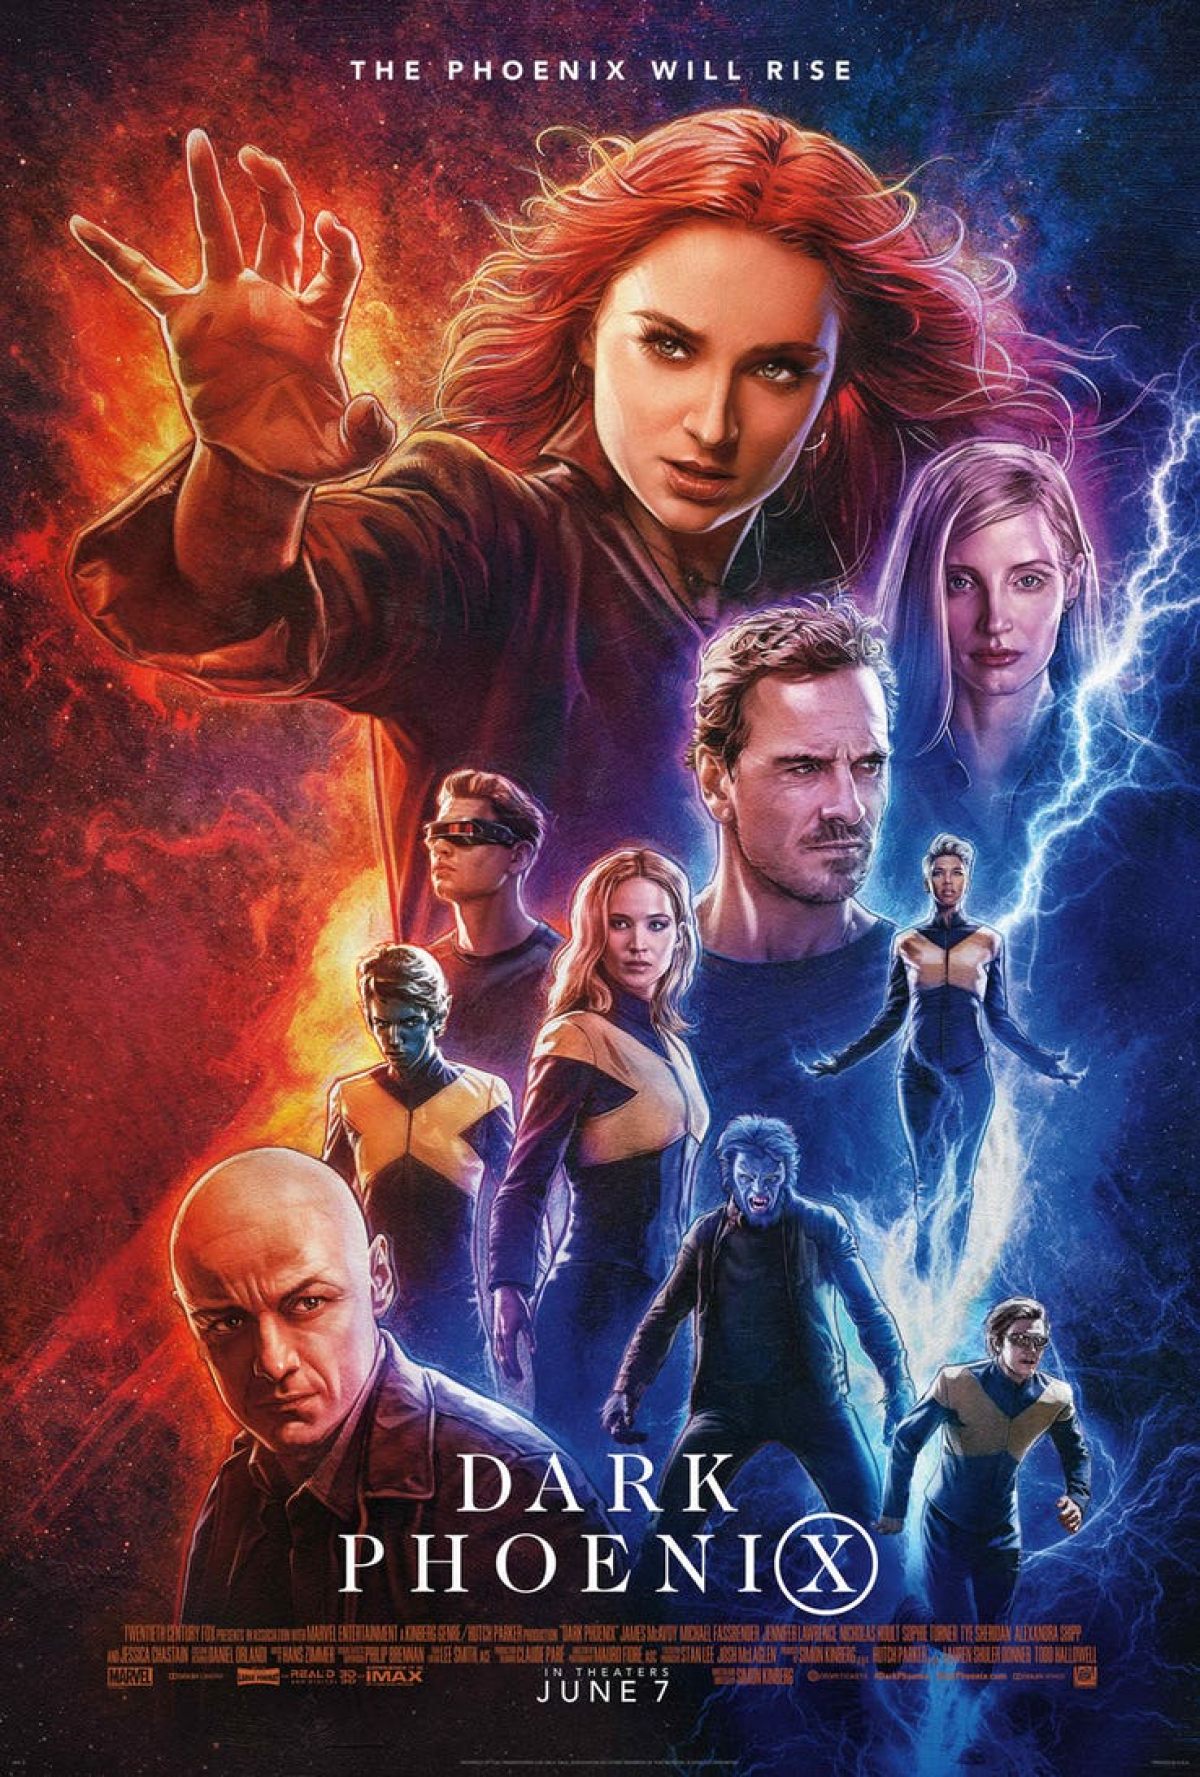 X Men: Dark Phoenix: Sophie Turner's film registers the worst opening in X Men franchise history